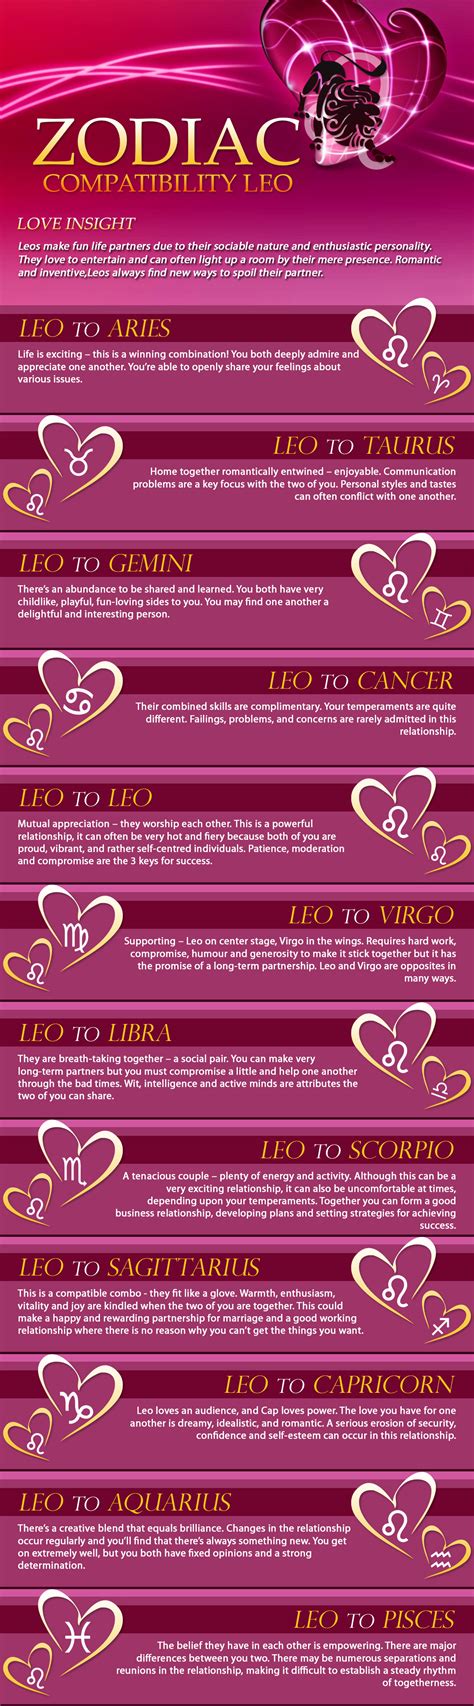 Leo Compatibility Leo Relationship Leo Compatibility Leo Zodiac Facts